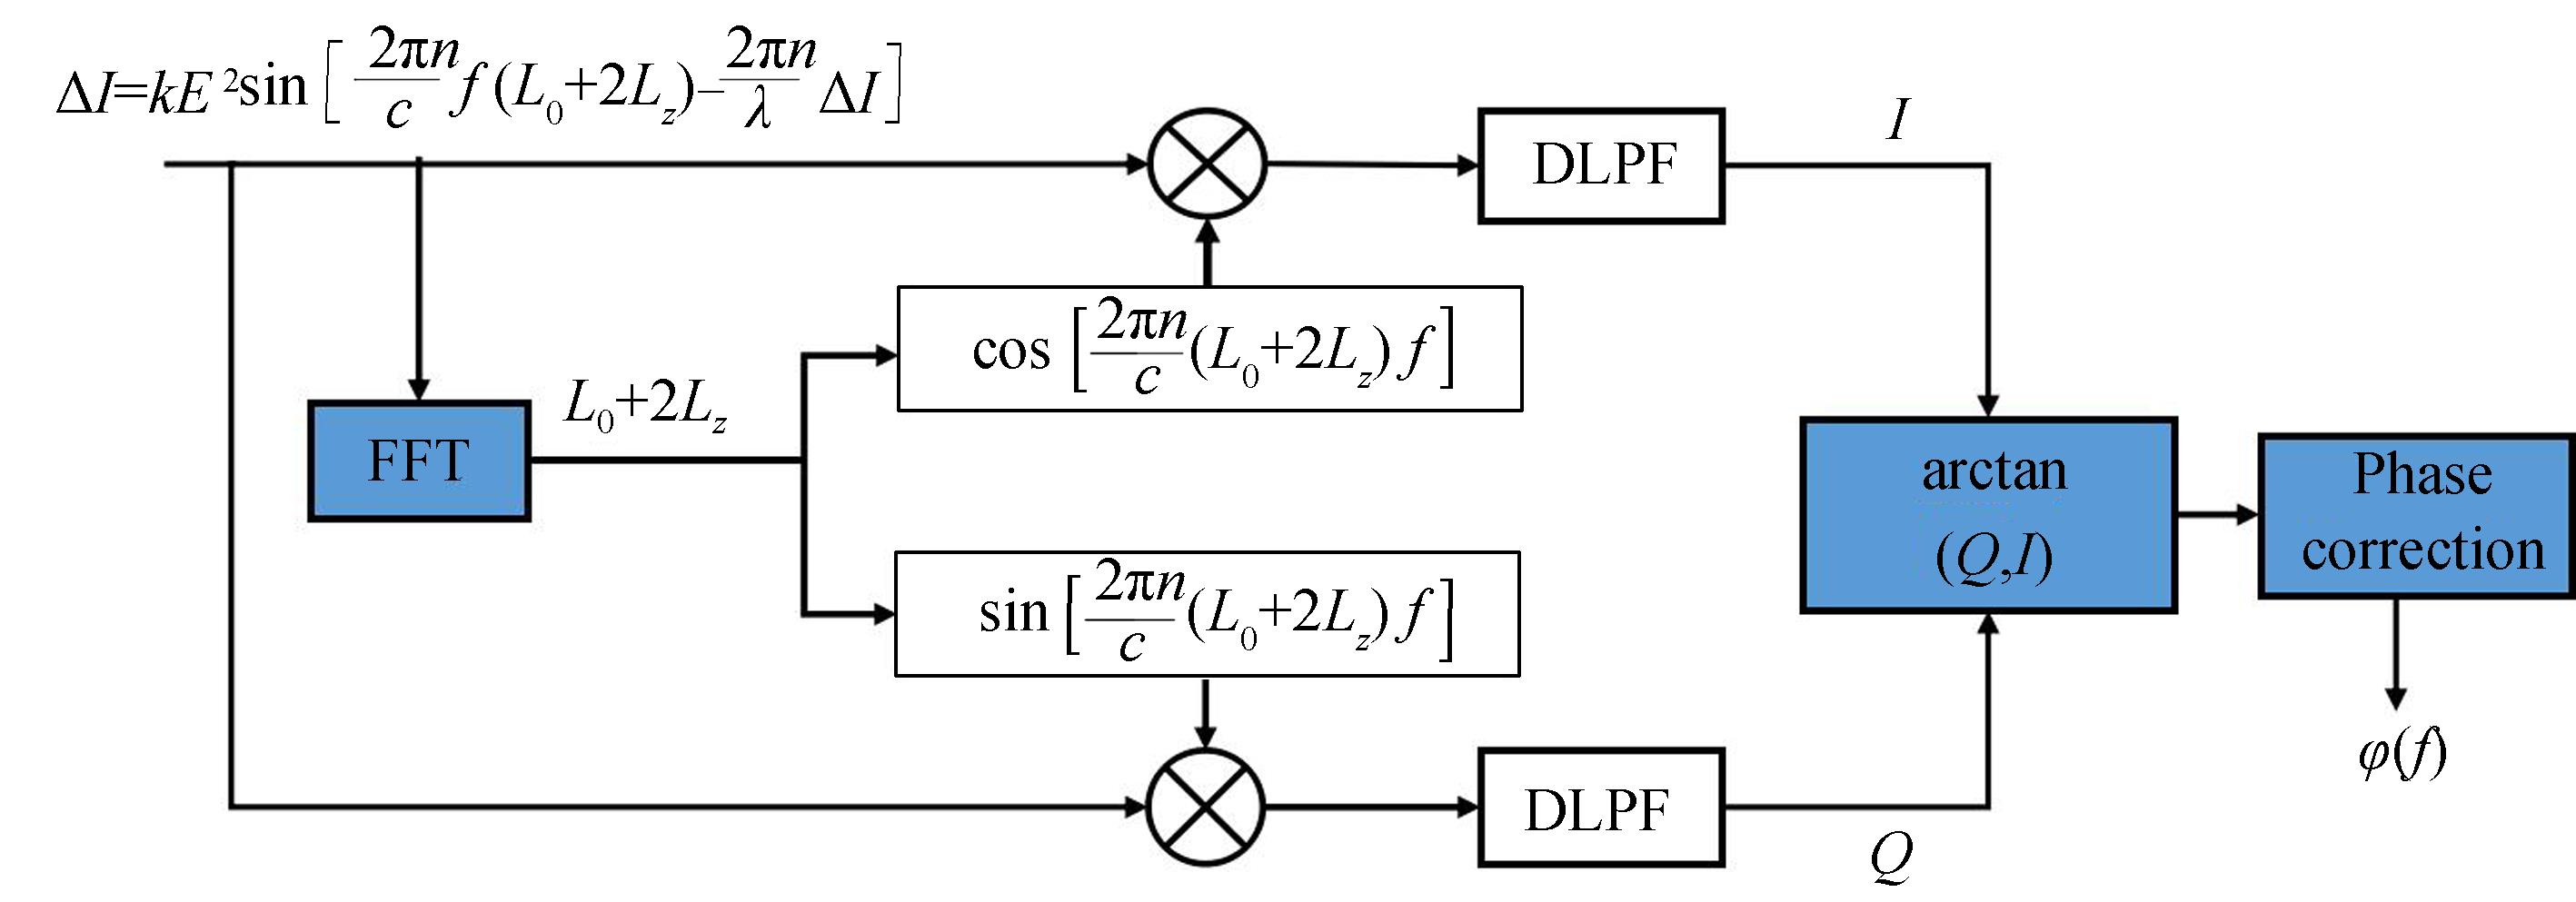 Demodulating principle diagram of digital mixing method in modified FSI system